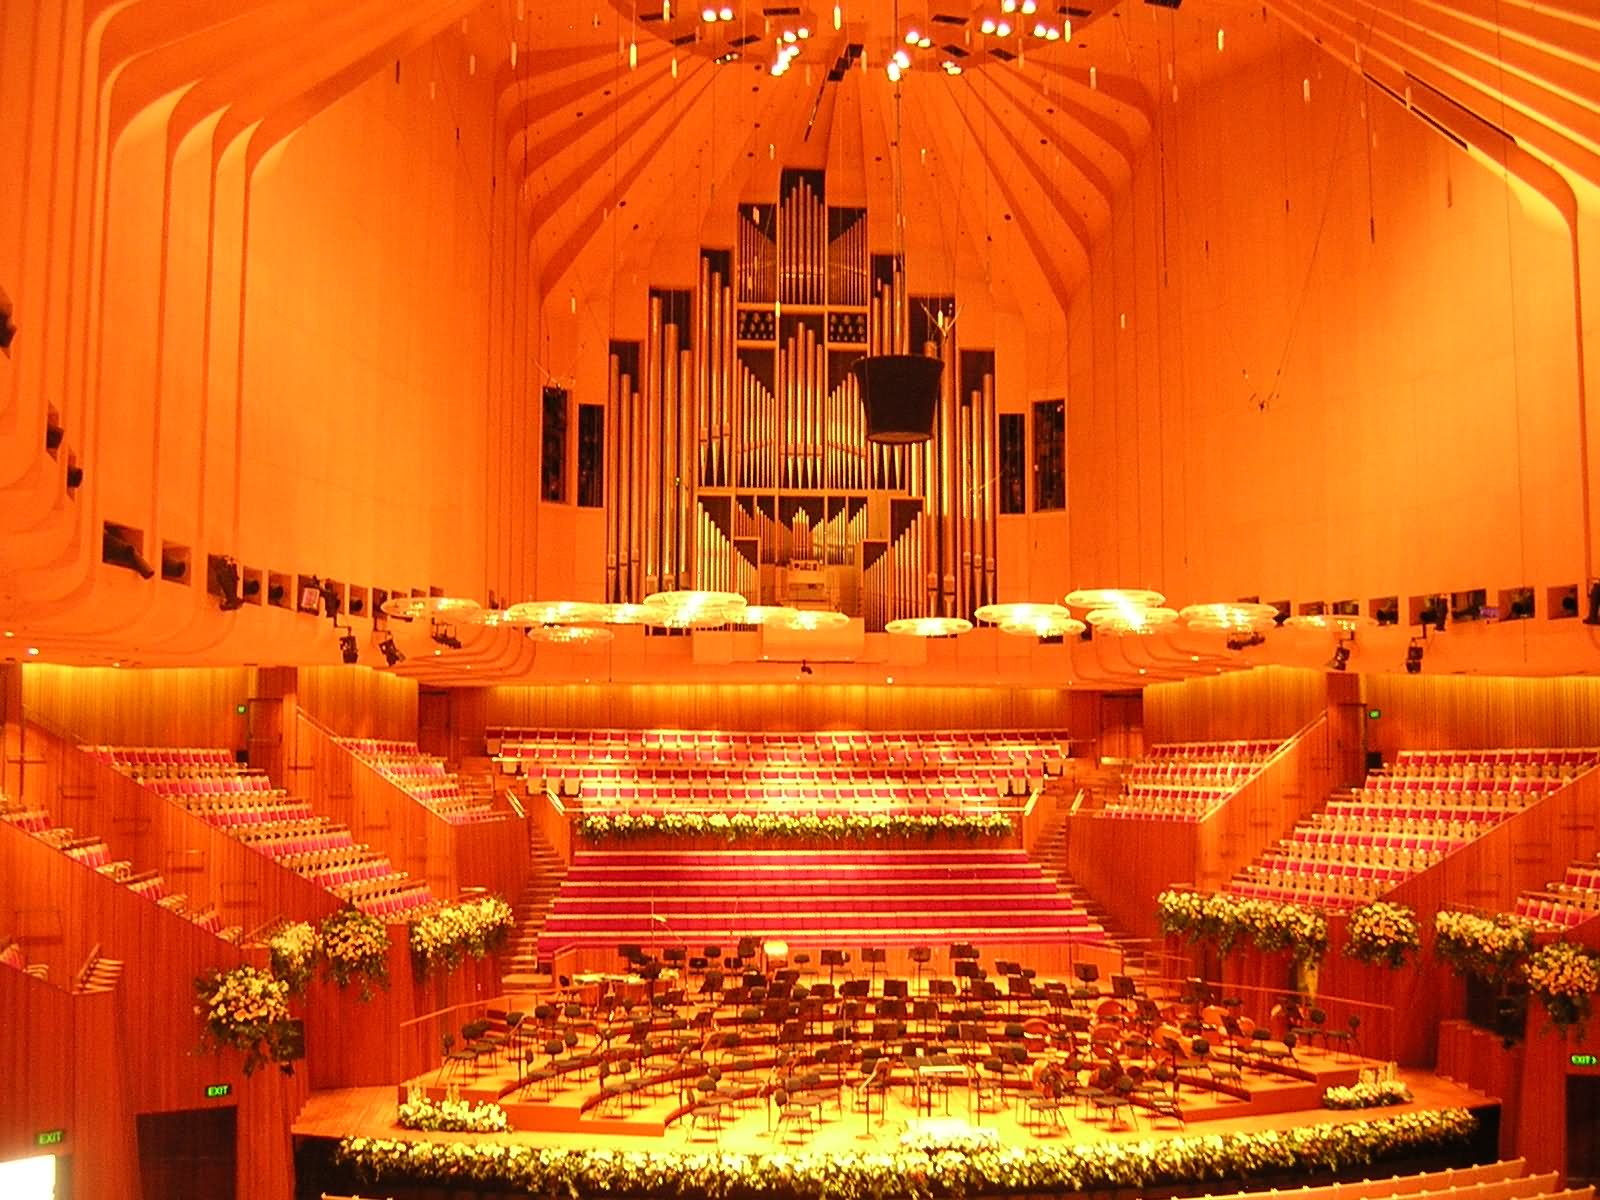 Sydney Opera House Interior Image